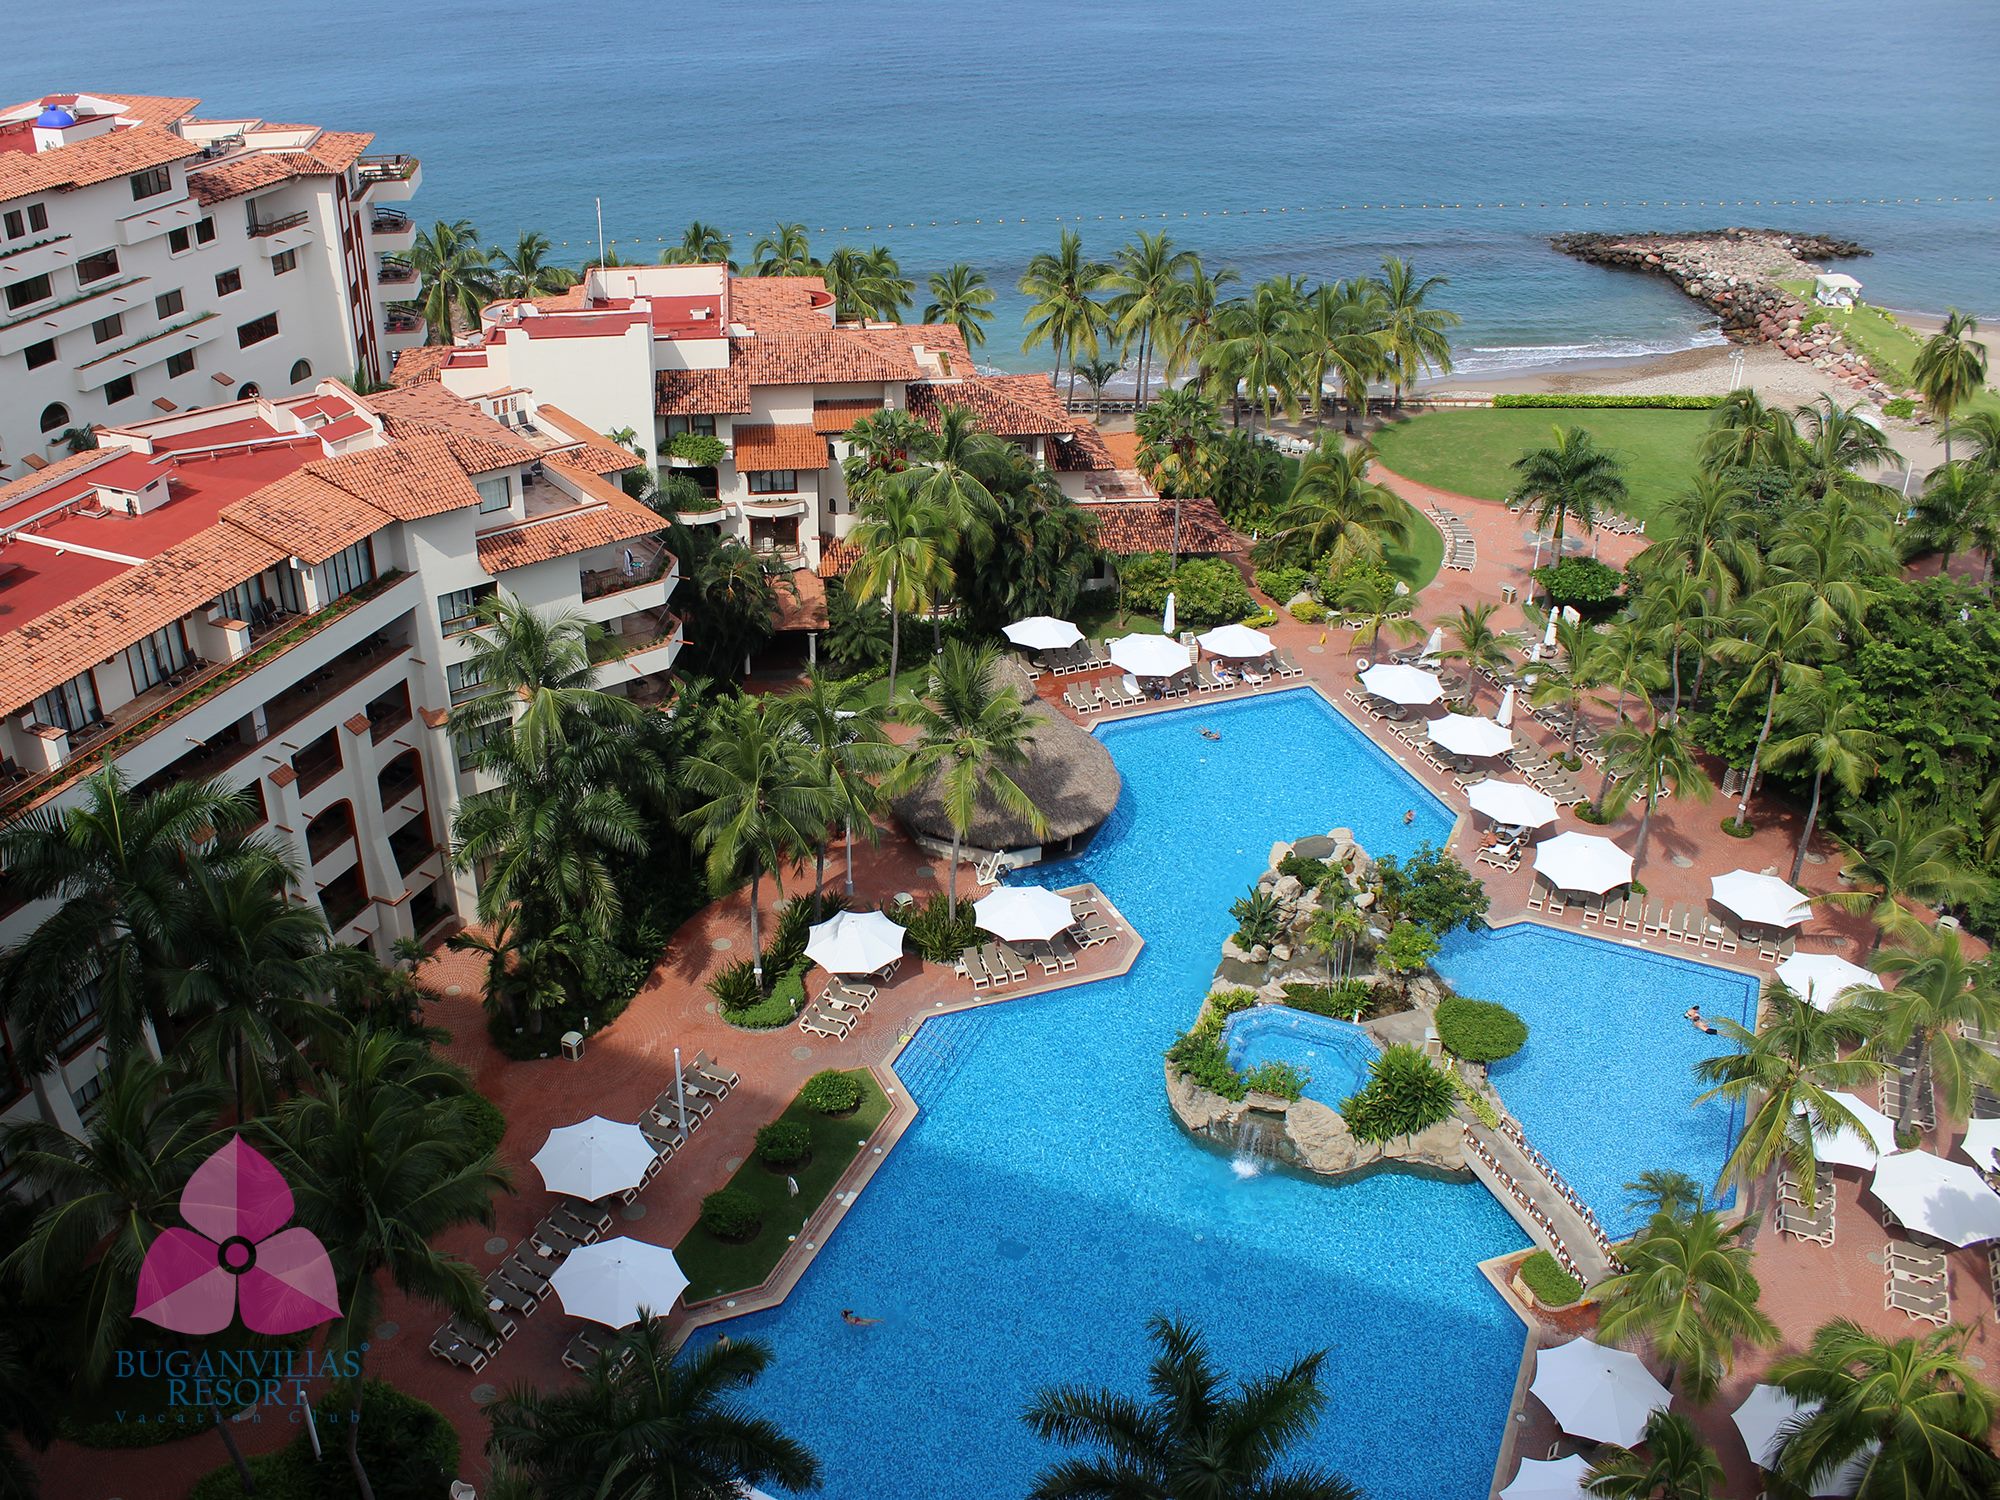 Buganvilias Resort Vacation Club, Puerto Vallarta